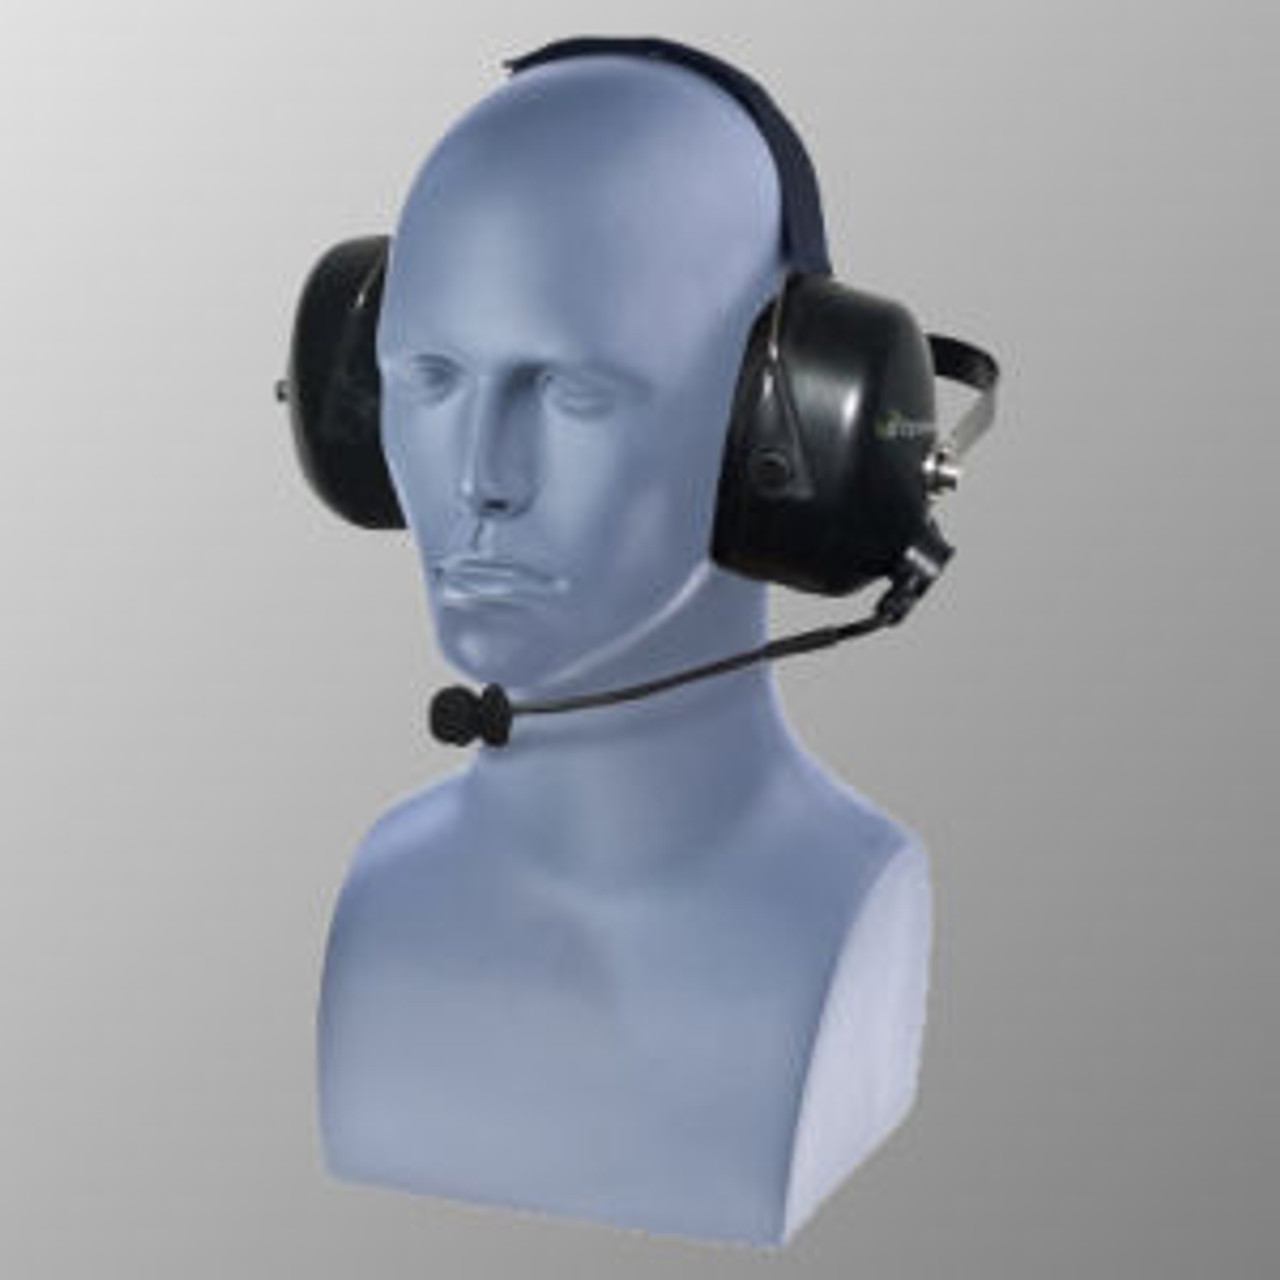 Kenwood NX-5400 Noise Canceling Wireless PTT Double Muff Behind The Head Headset